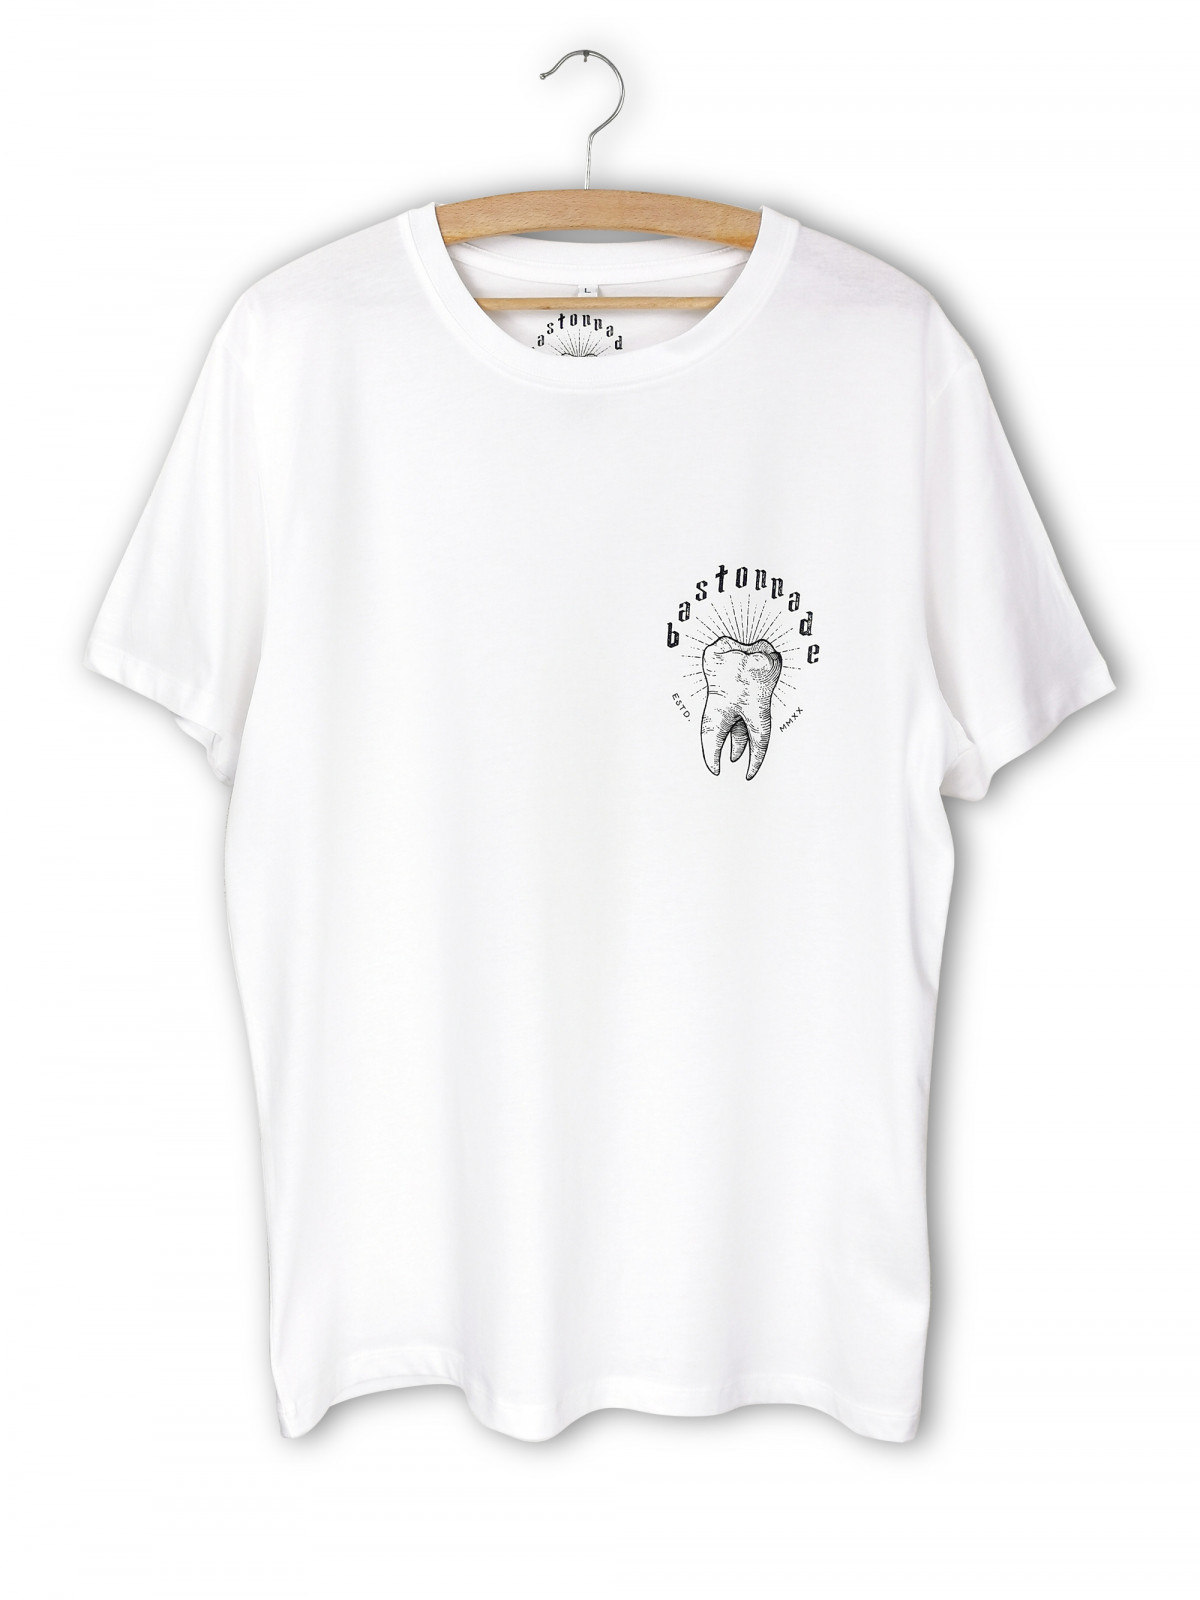 'Classic Logo' t-shirt white - bastonnade clothing